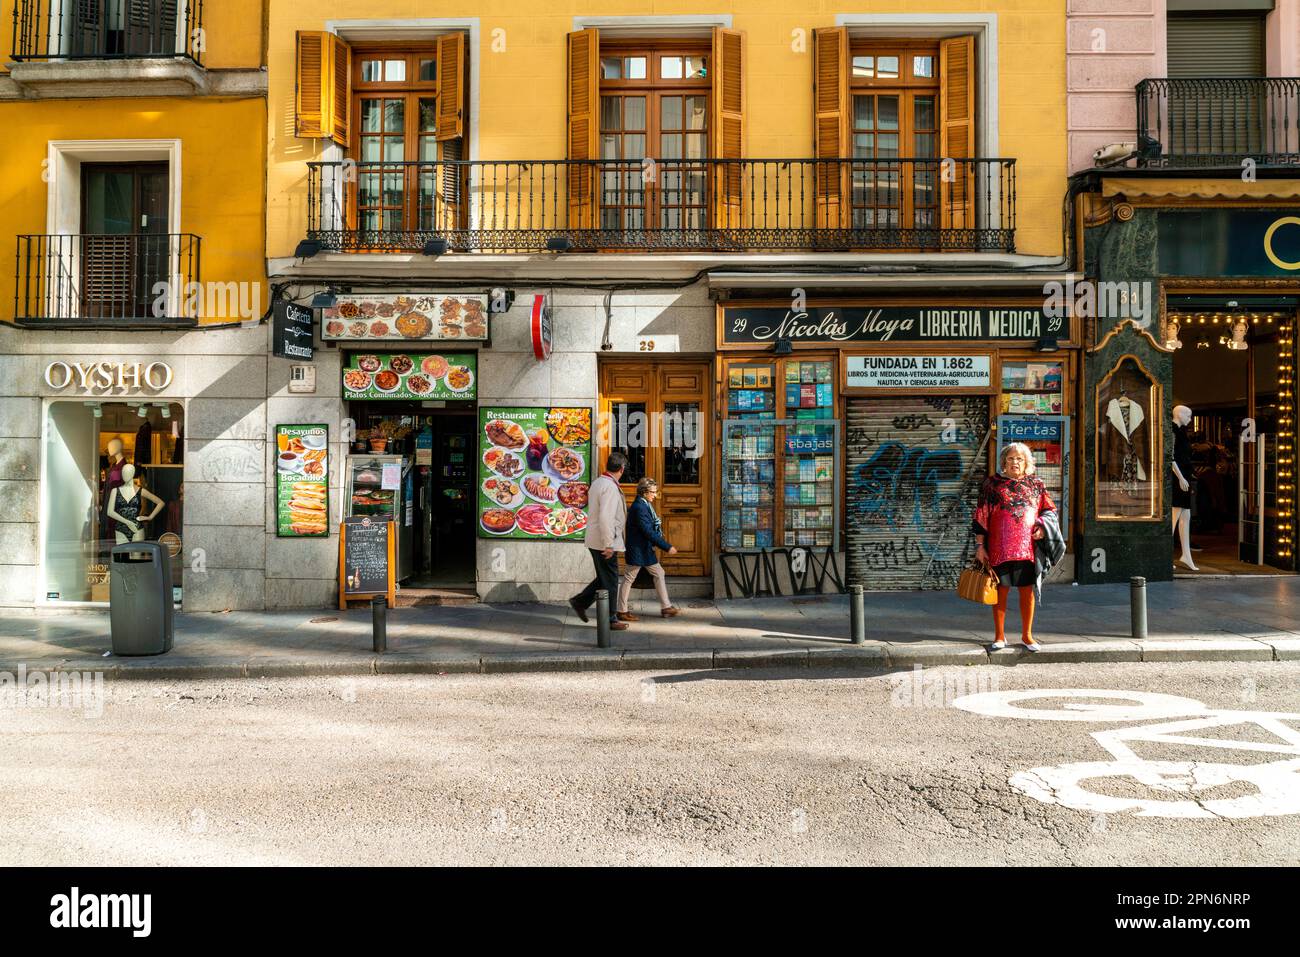 calle de carretas shopping street near Puerta del Sol, Madrid, Spain Stock Photo